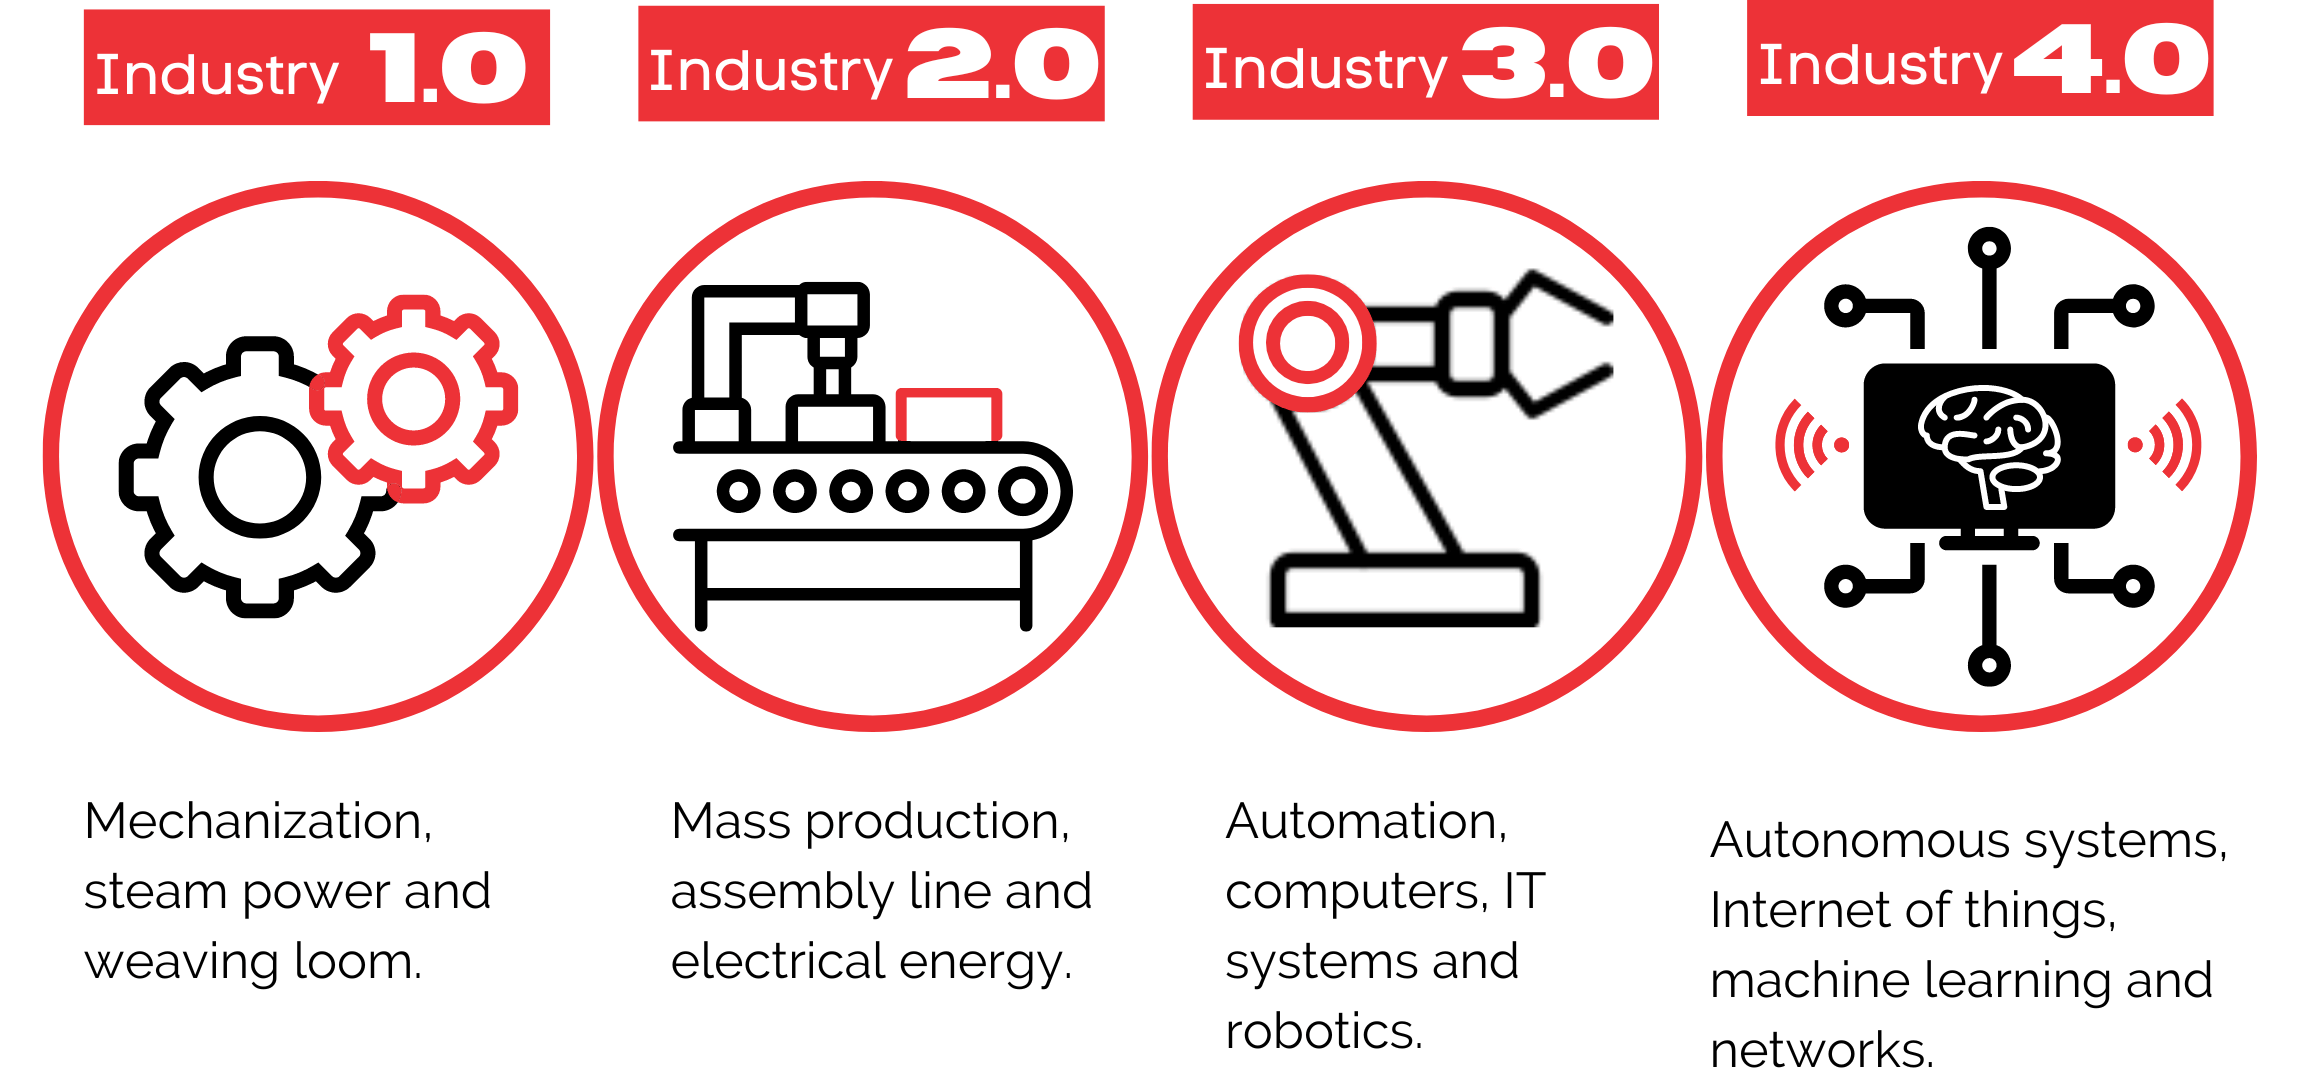 Industrial evolution diagram towards Industry 4.0